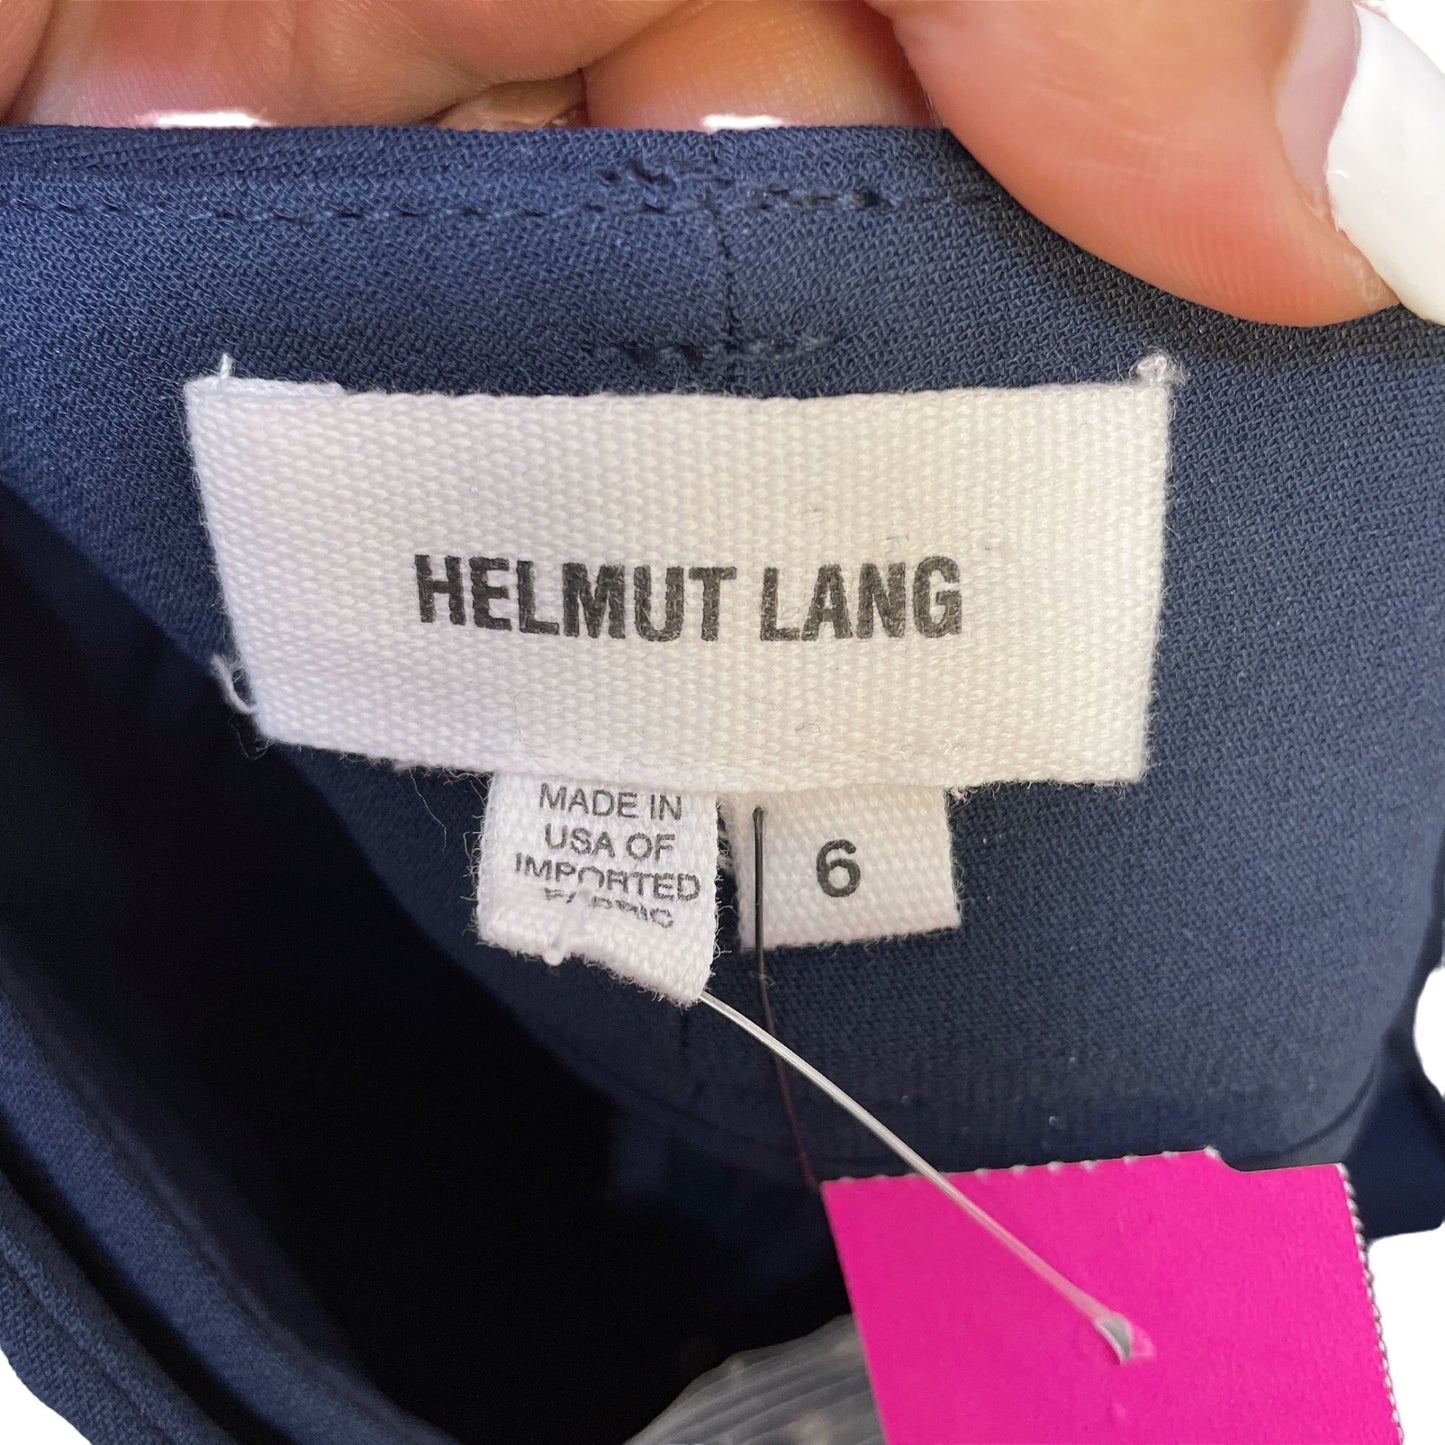 *NWD Helmut Lang Navy Uniform Shorts Size 6